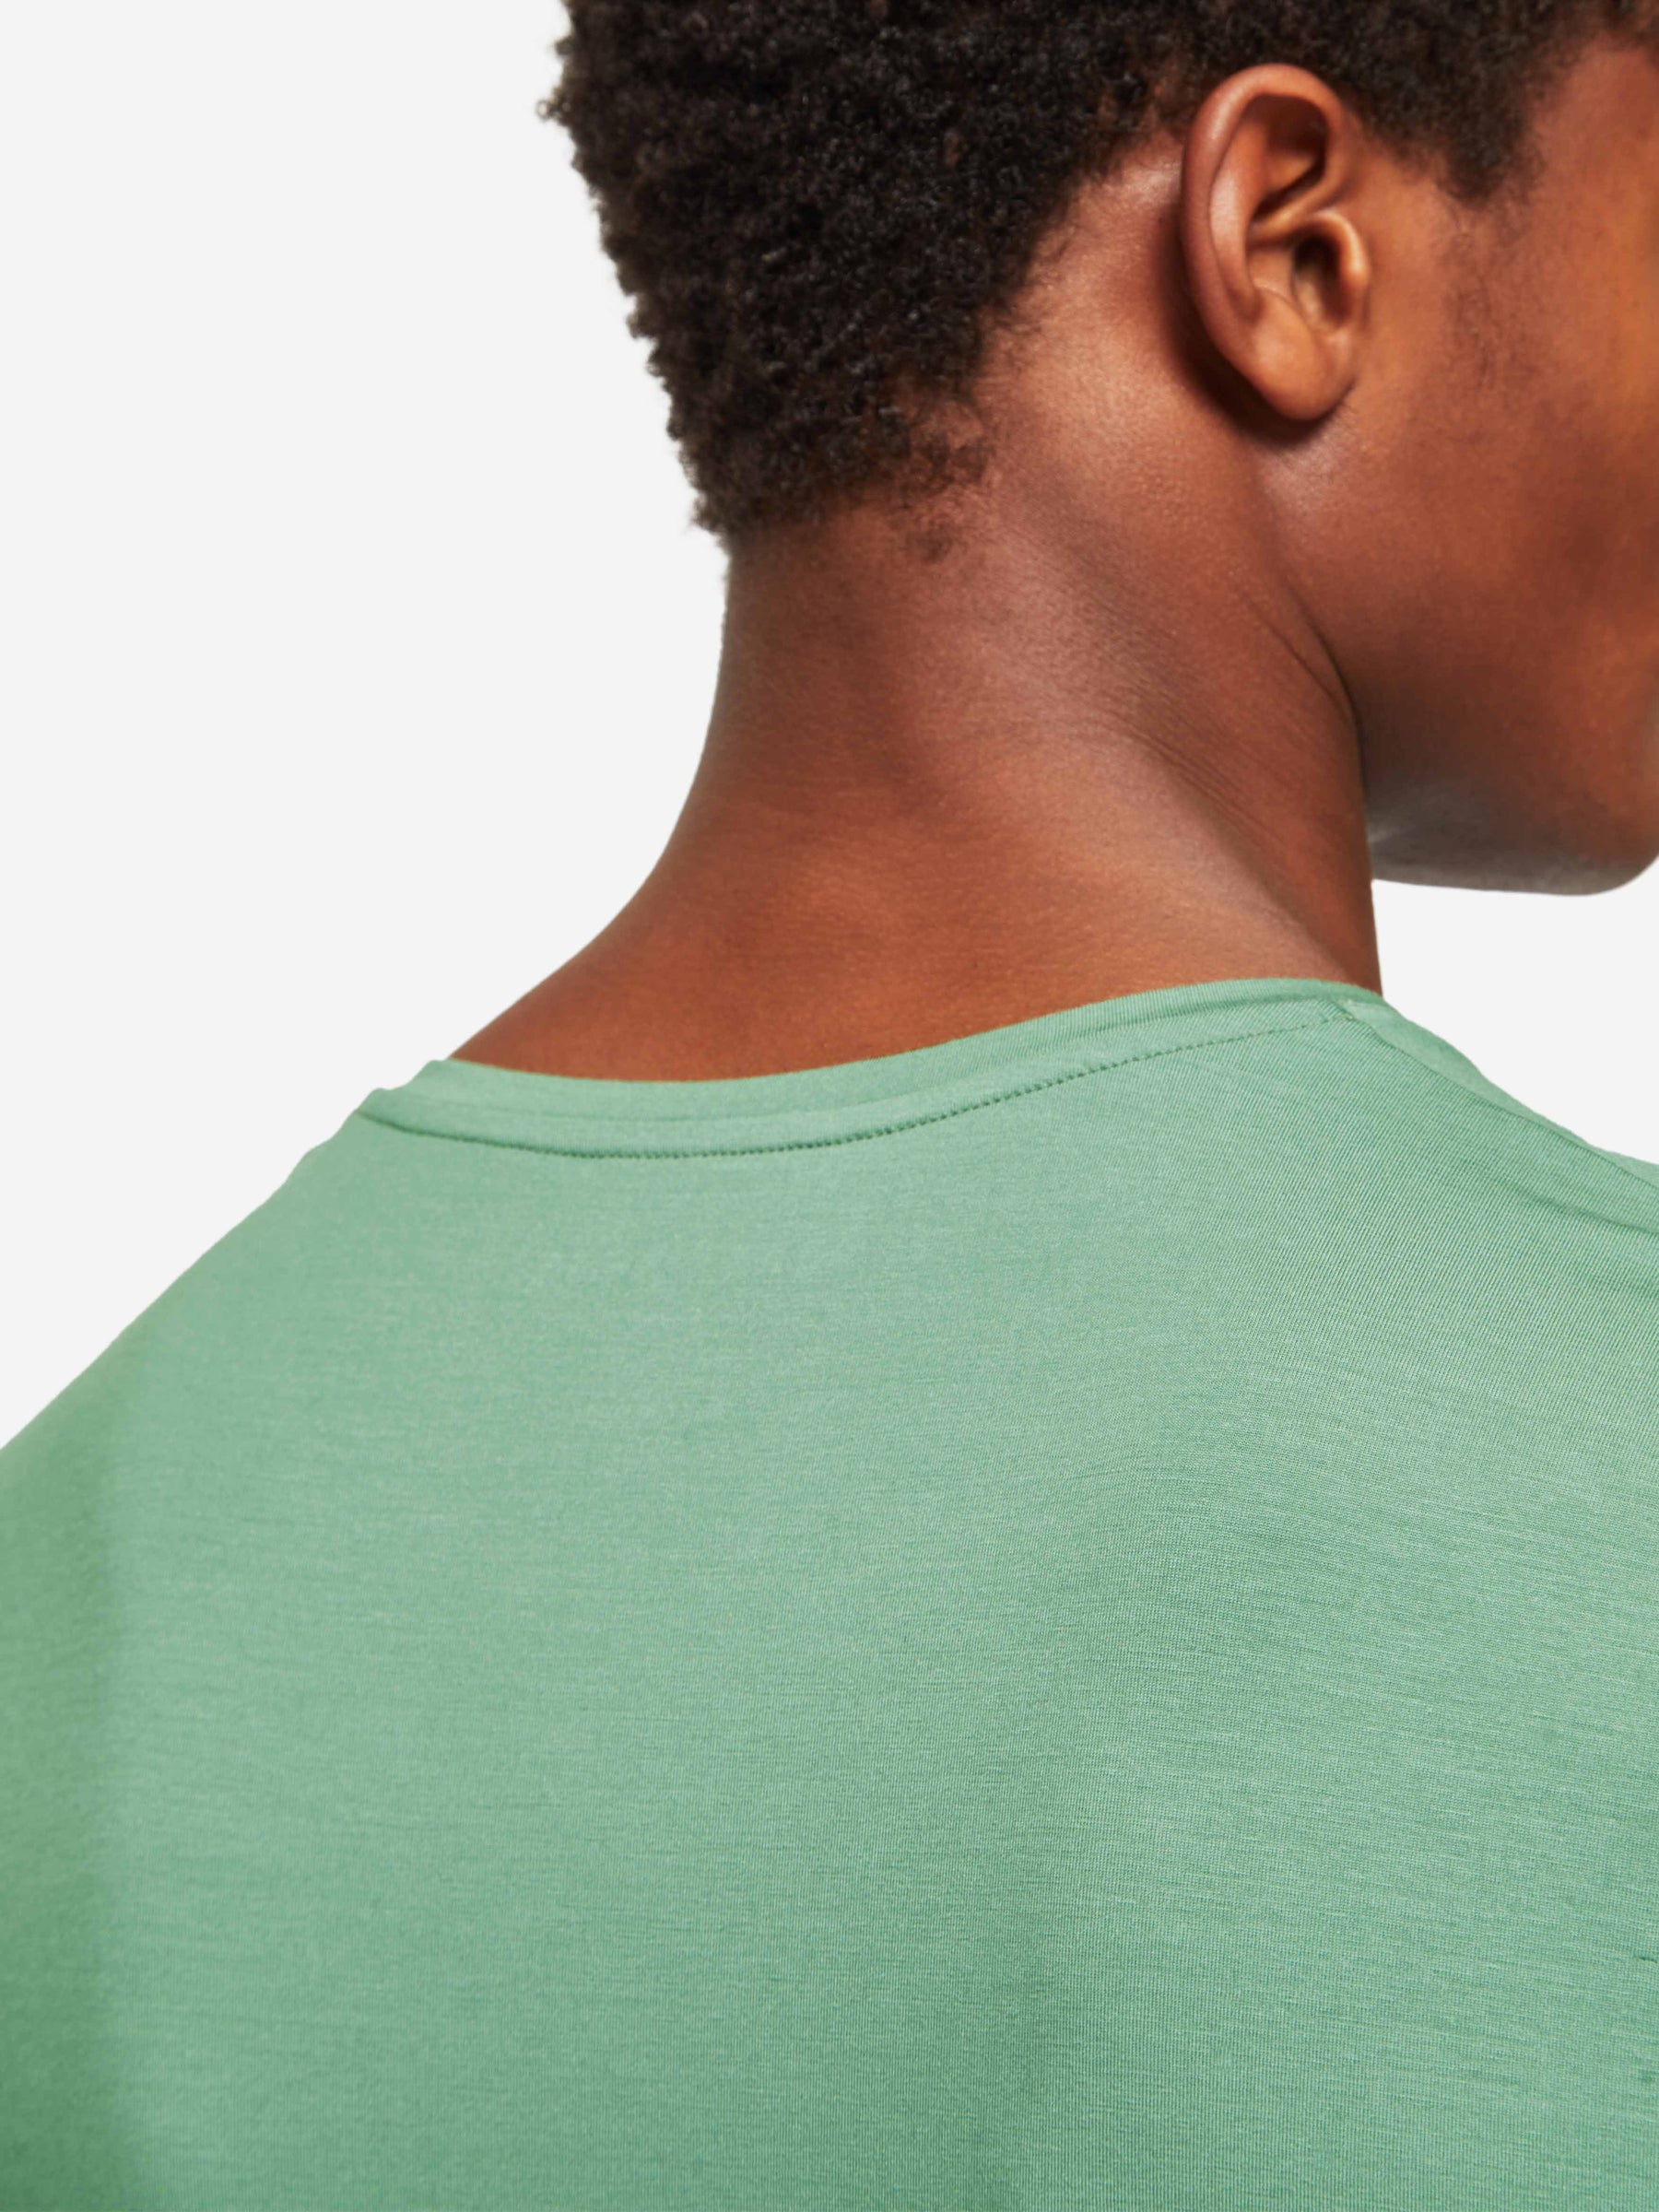 Men's V-Neck T-Shirt Basel Micro Modal Stretch Sage Green